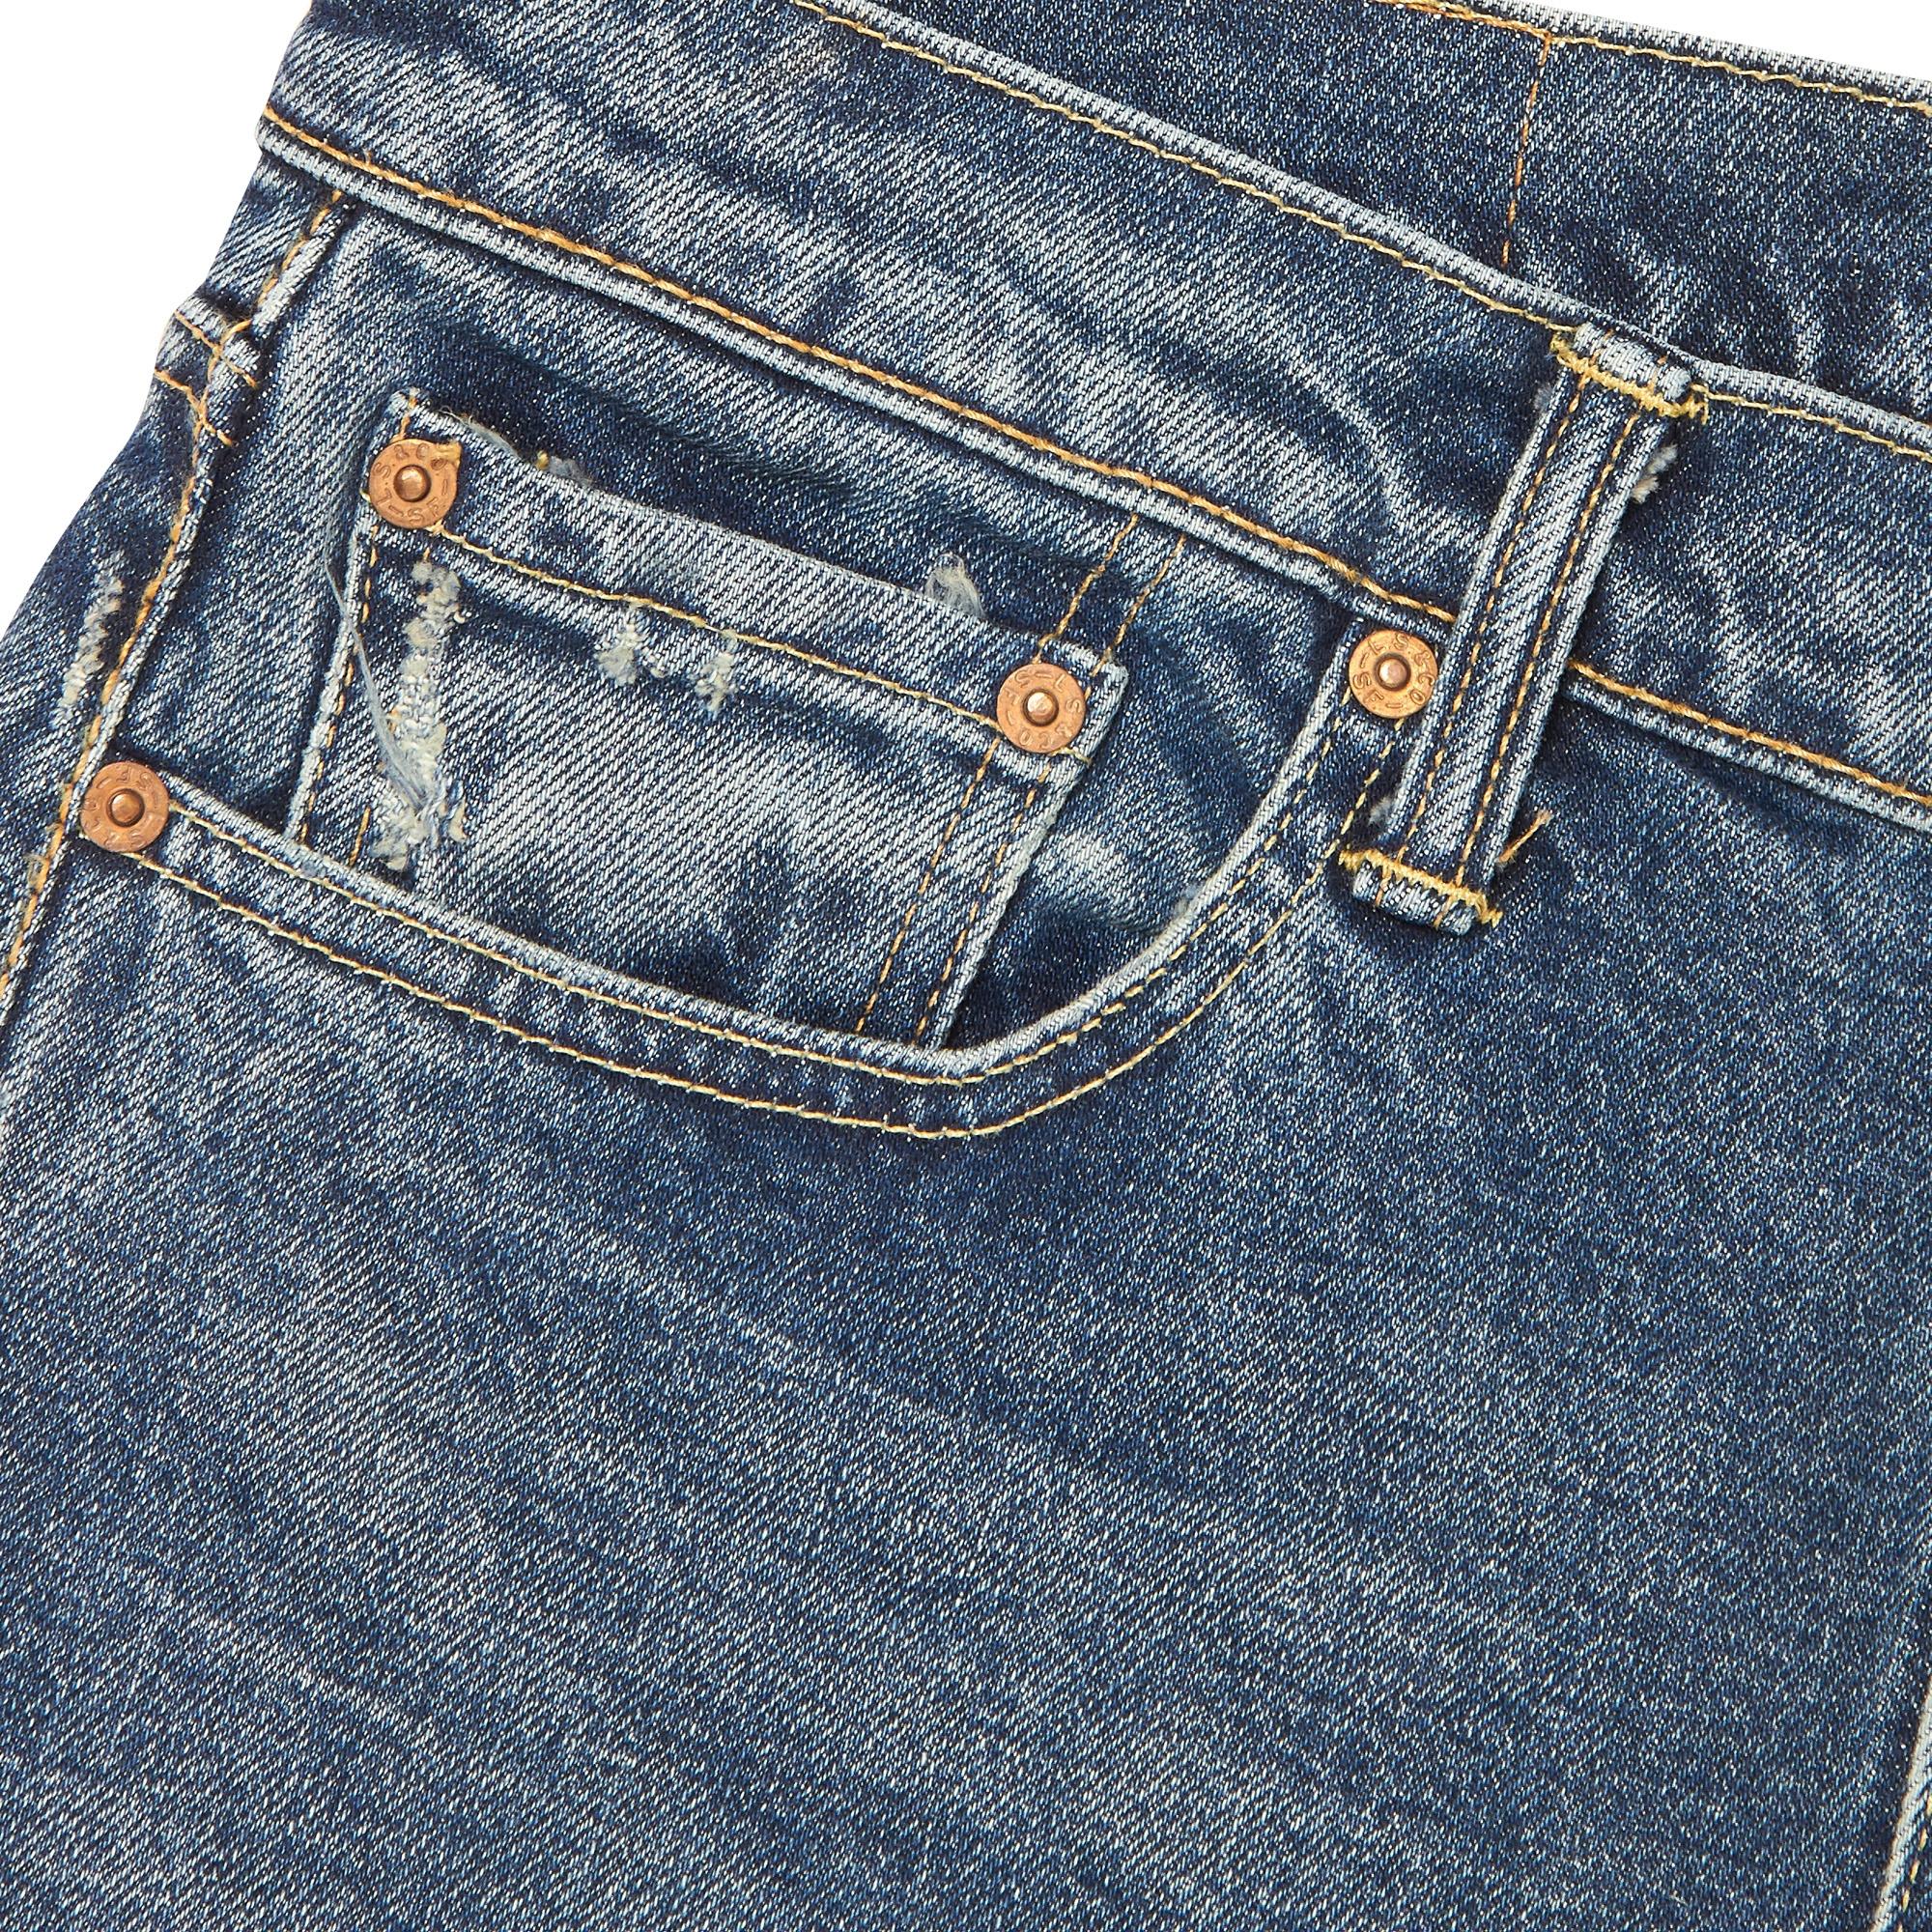 Levi's Denim 511 Slim Fit Jeans in Blue for Men - Lyst